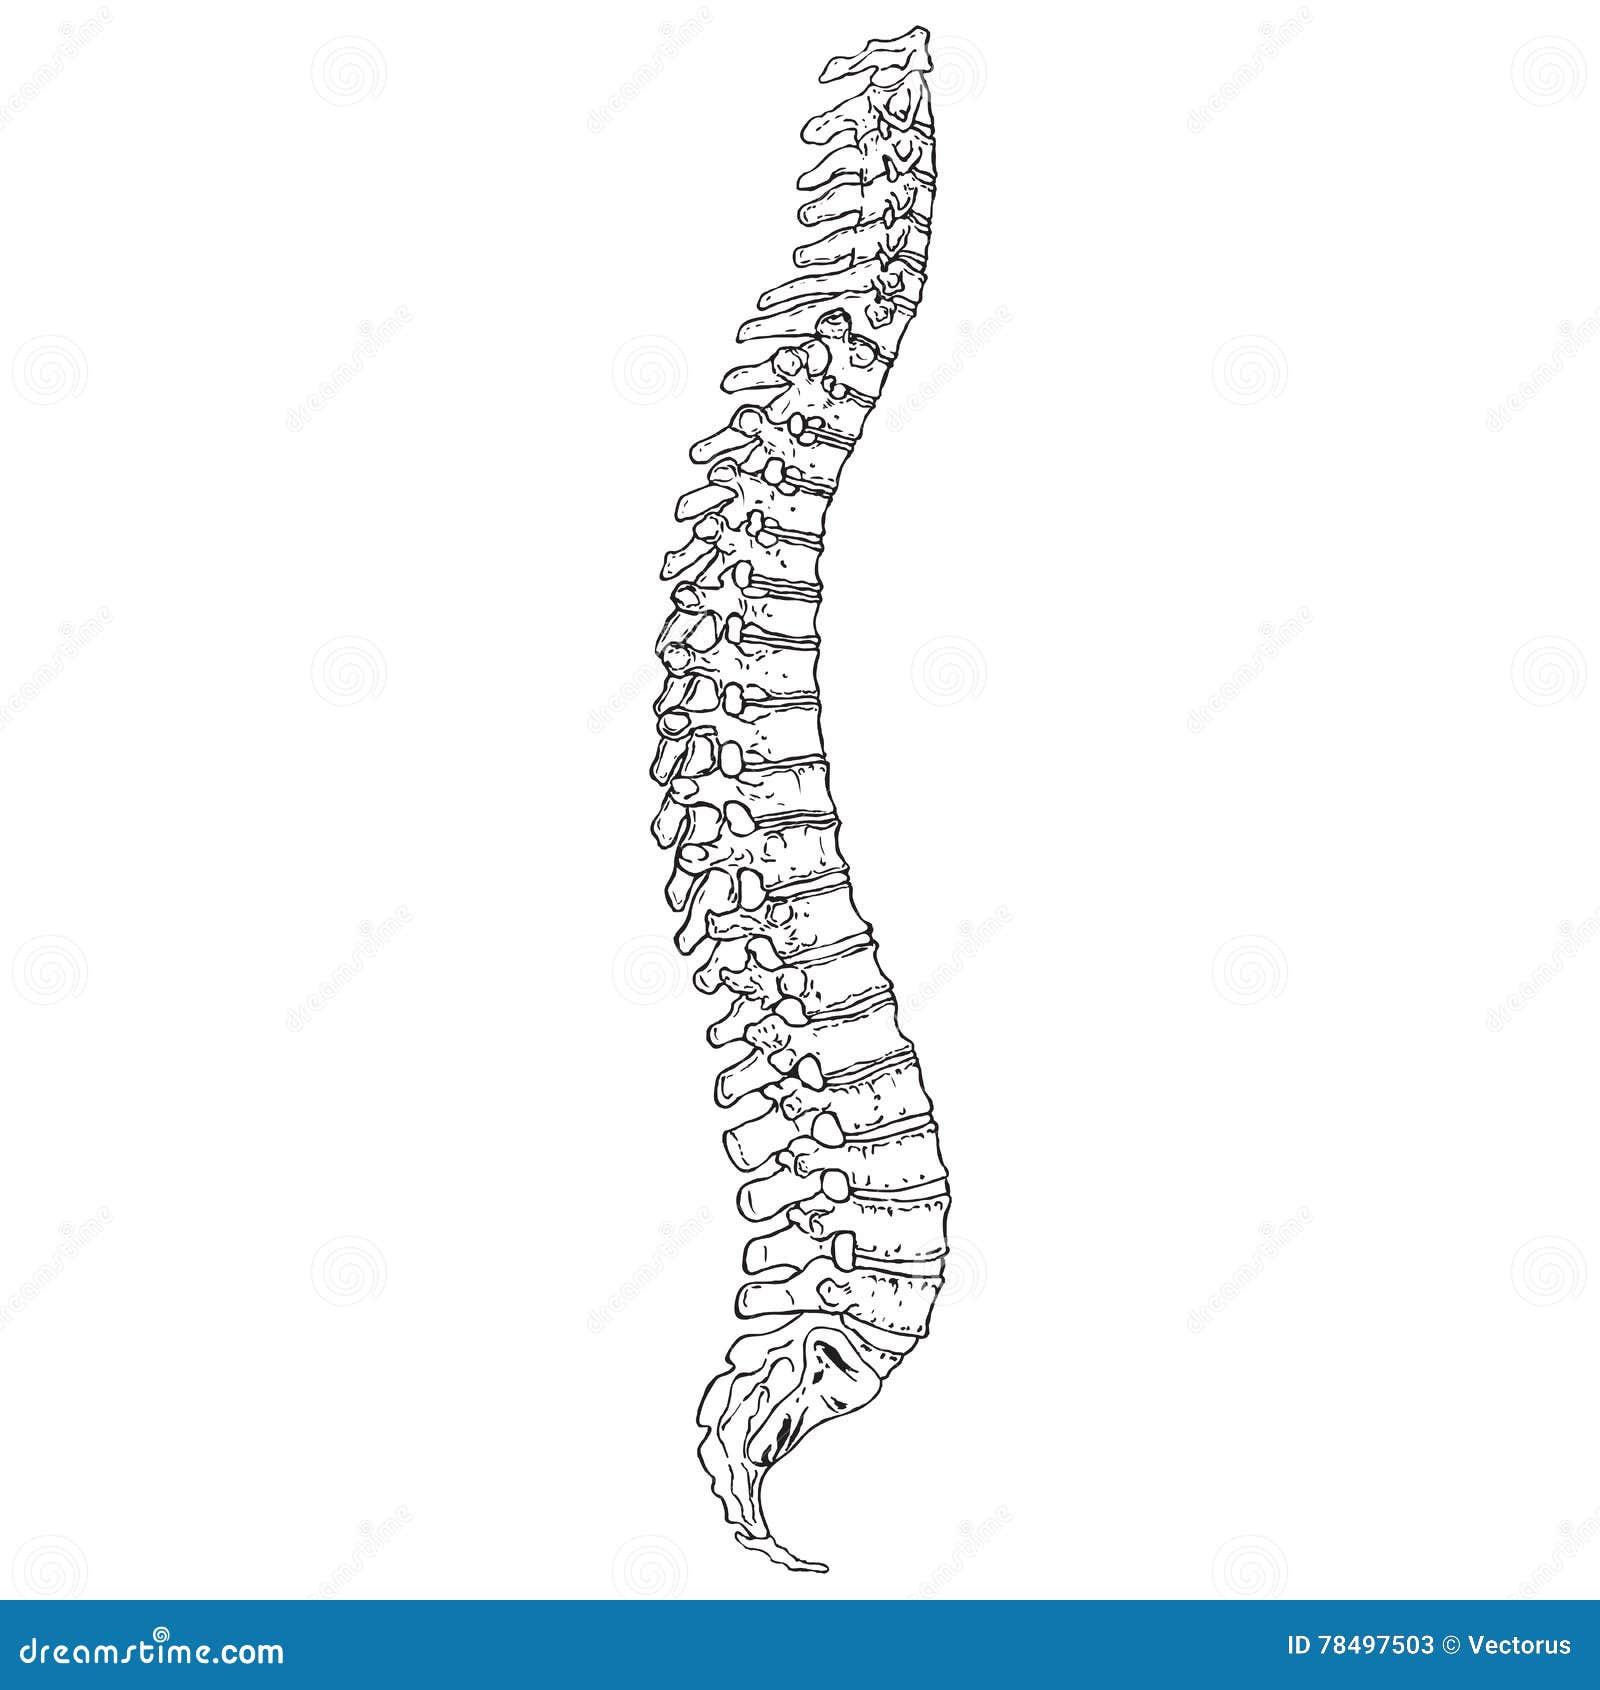 2800 Human Spine Drawing Illustrations RoyaltyFree Vector Graphics   Clip Art  iStock  Human spine vector Spine sketch